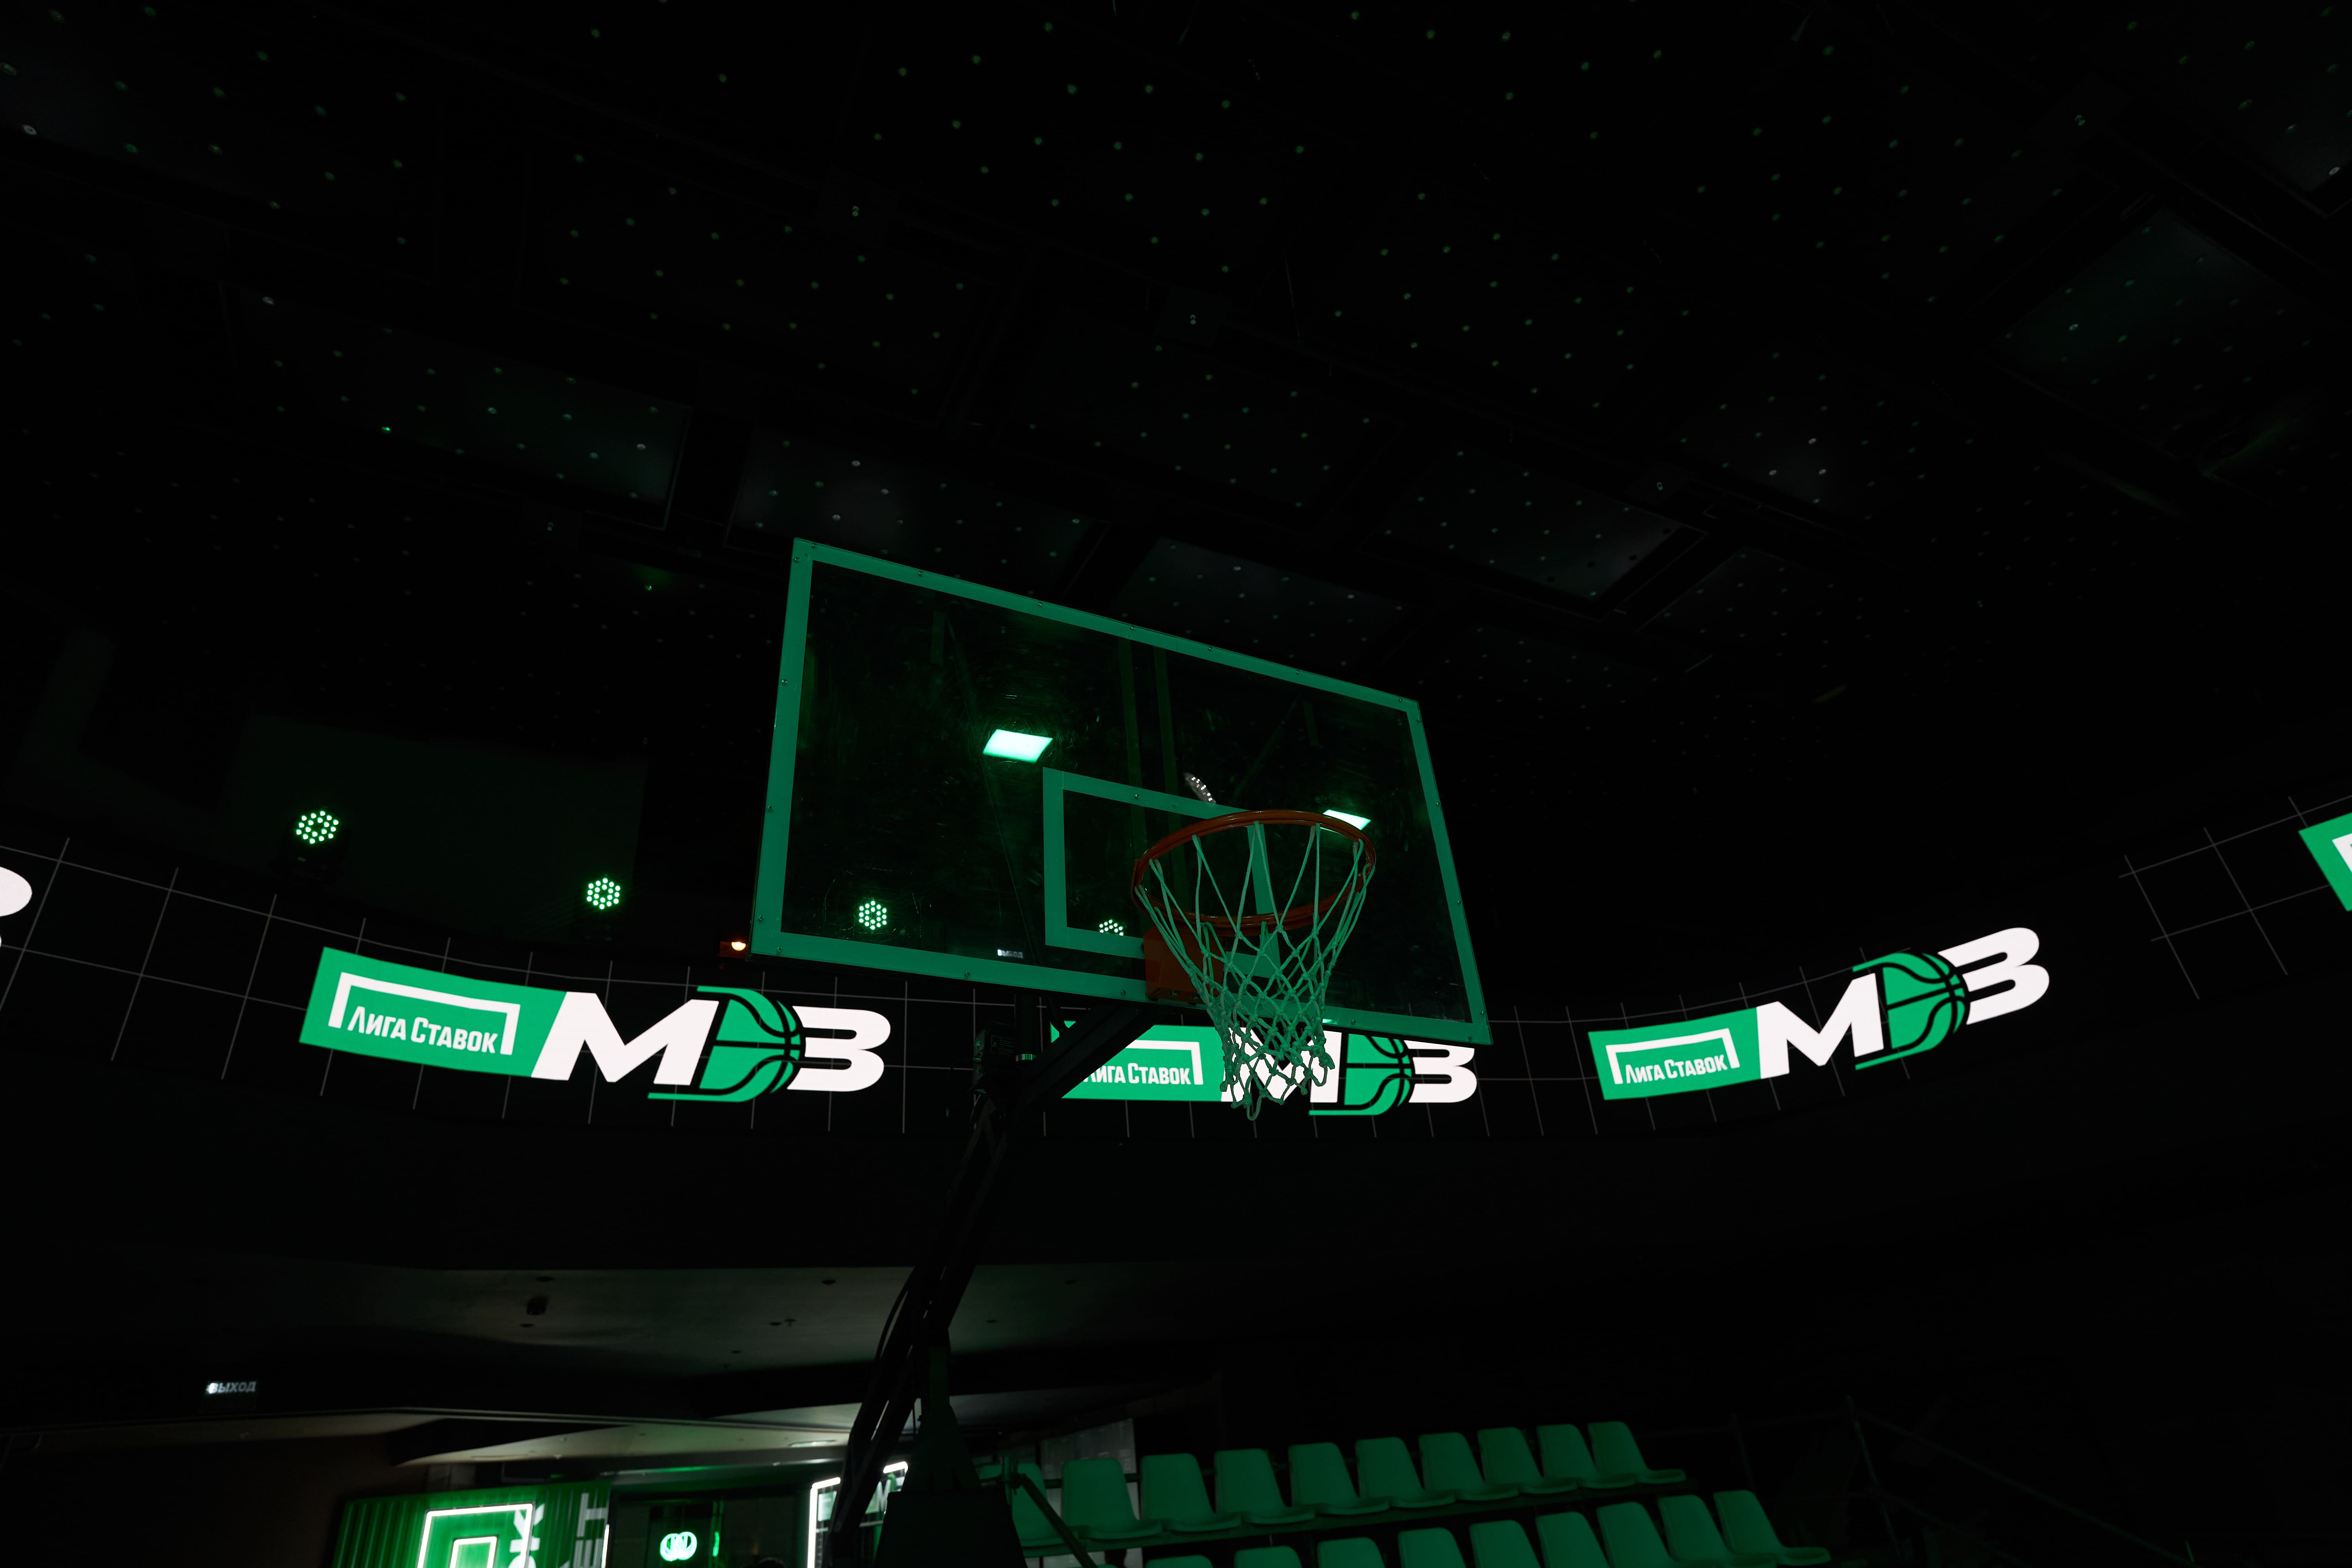 Лига ставок медиа баскет. Родина Медиа баскетбол. Медиа баскетбол. Players Club Media Basket.